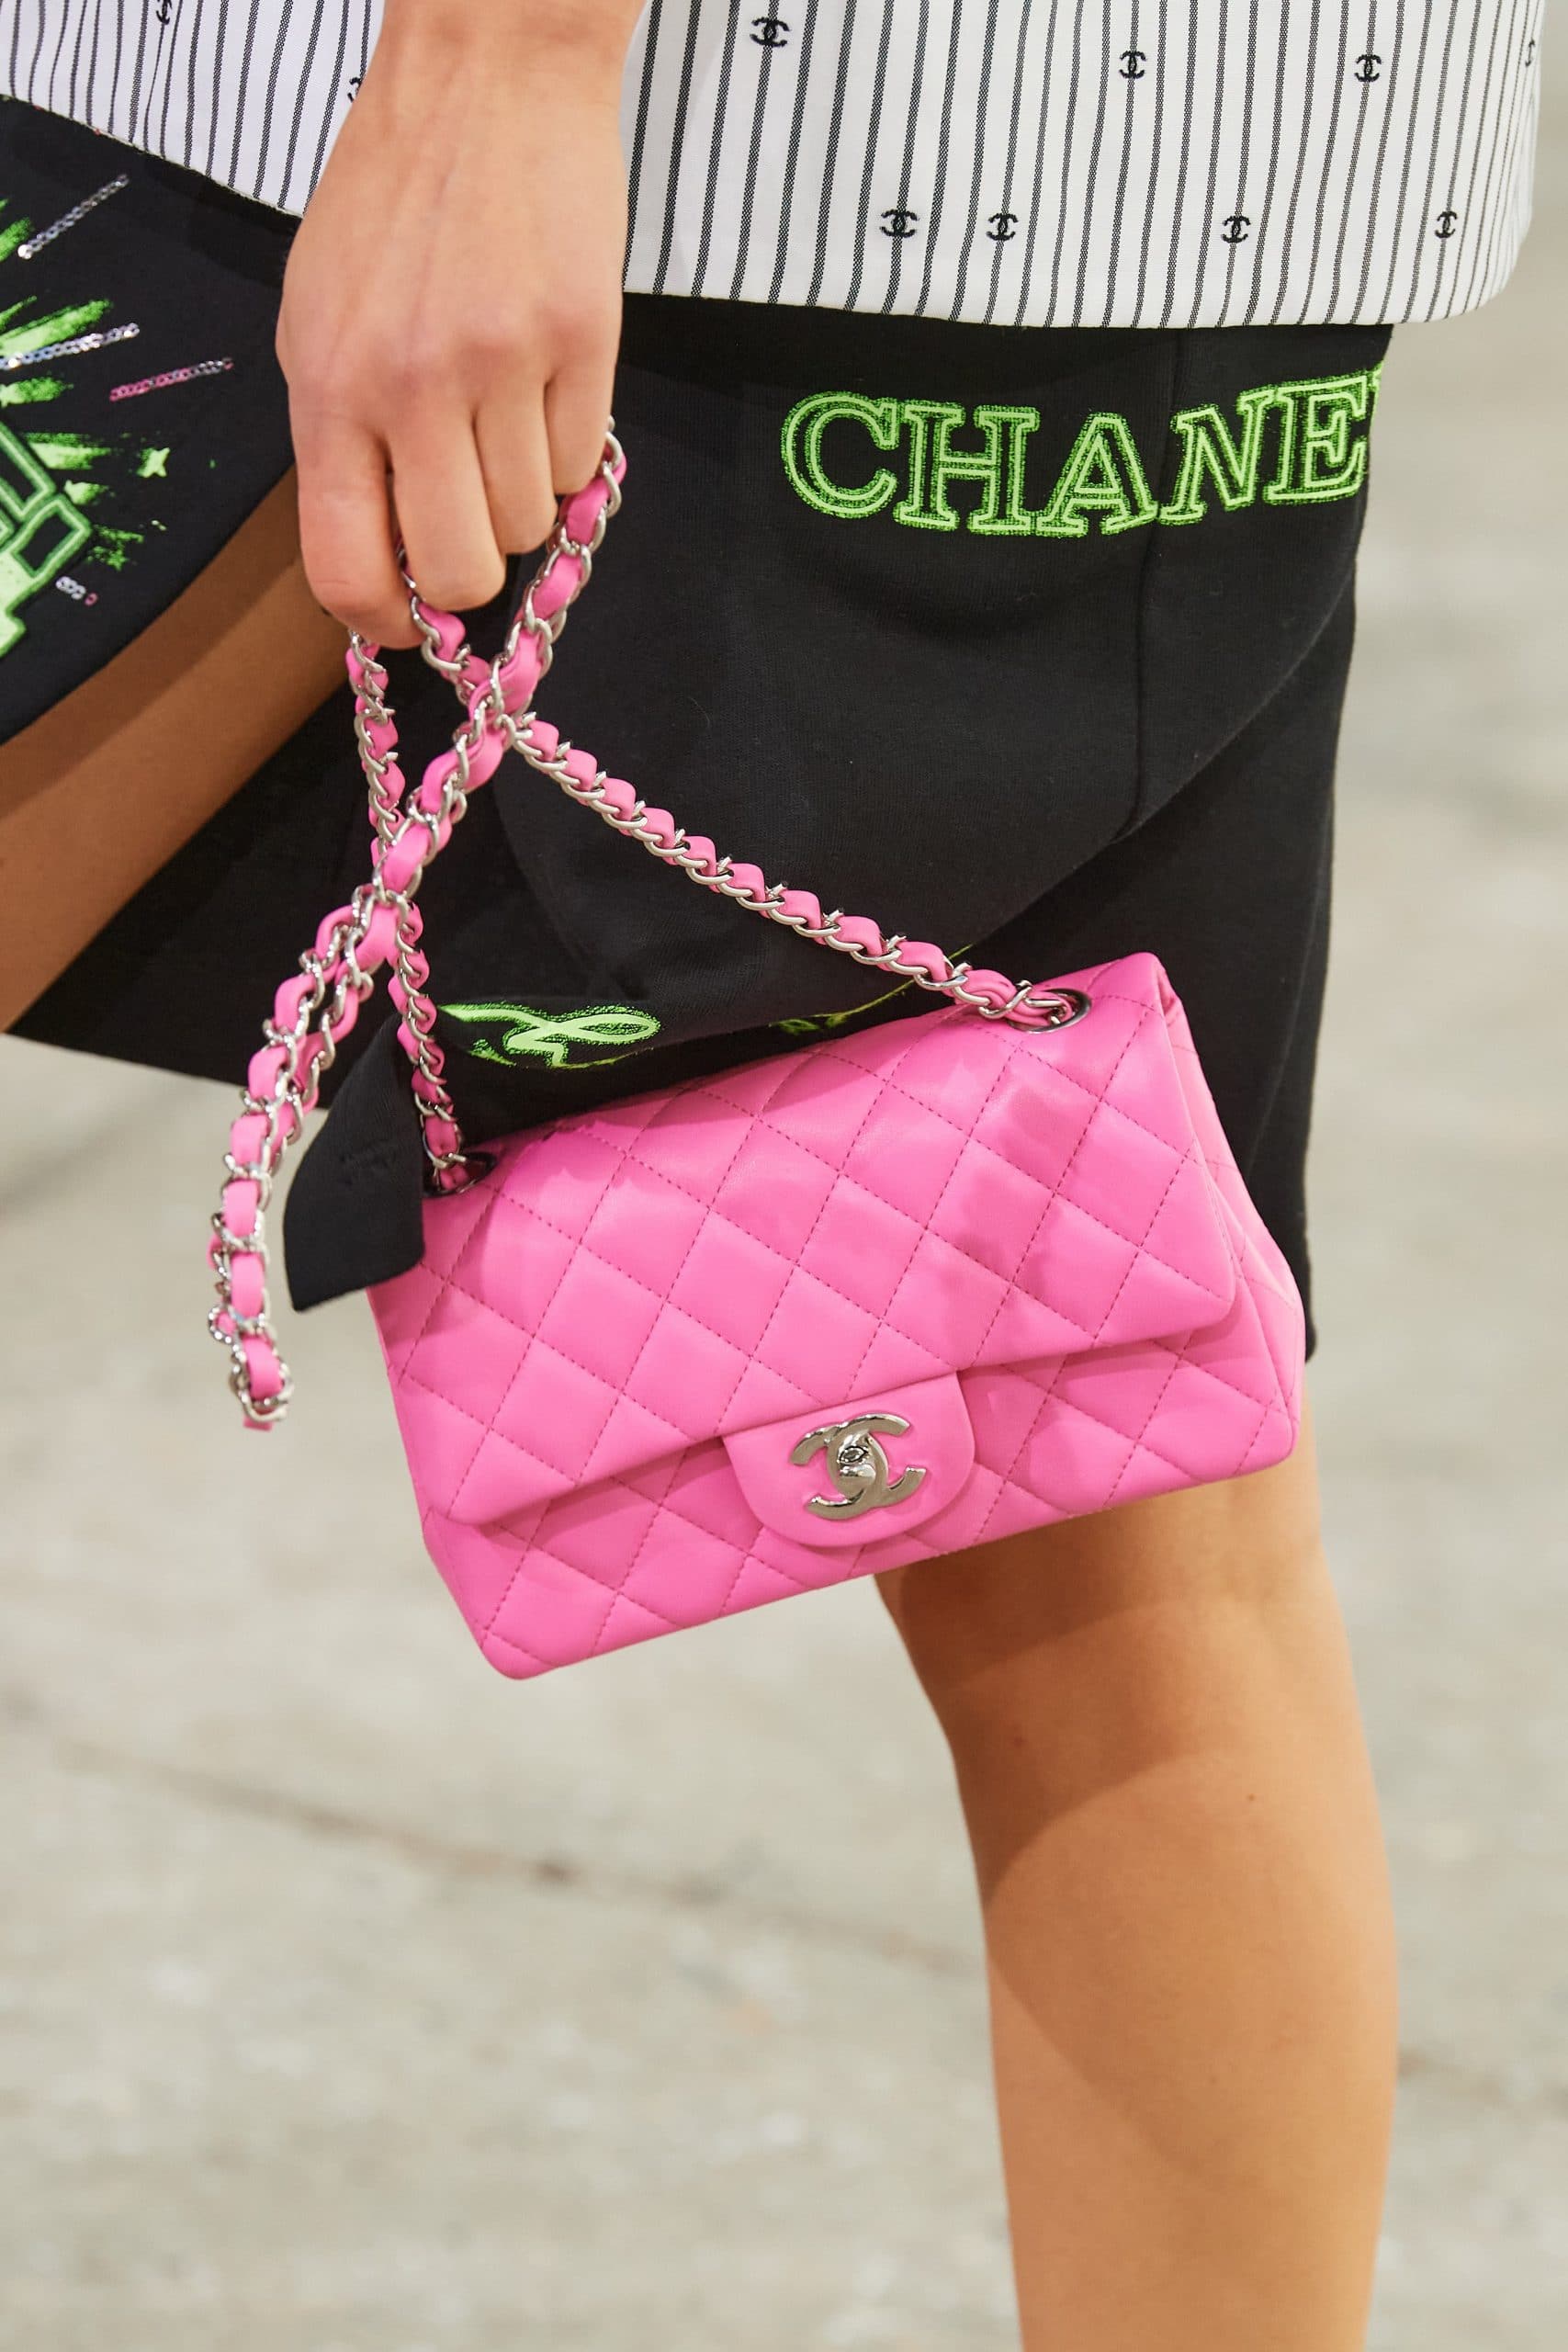 Chanel Handbags 2021 | semashow.com